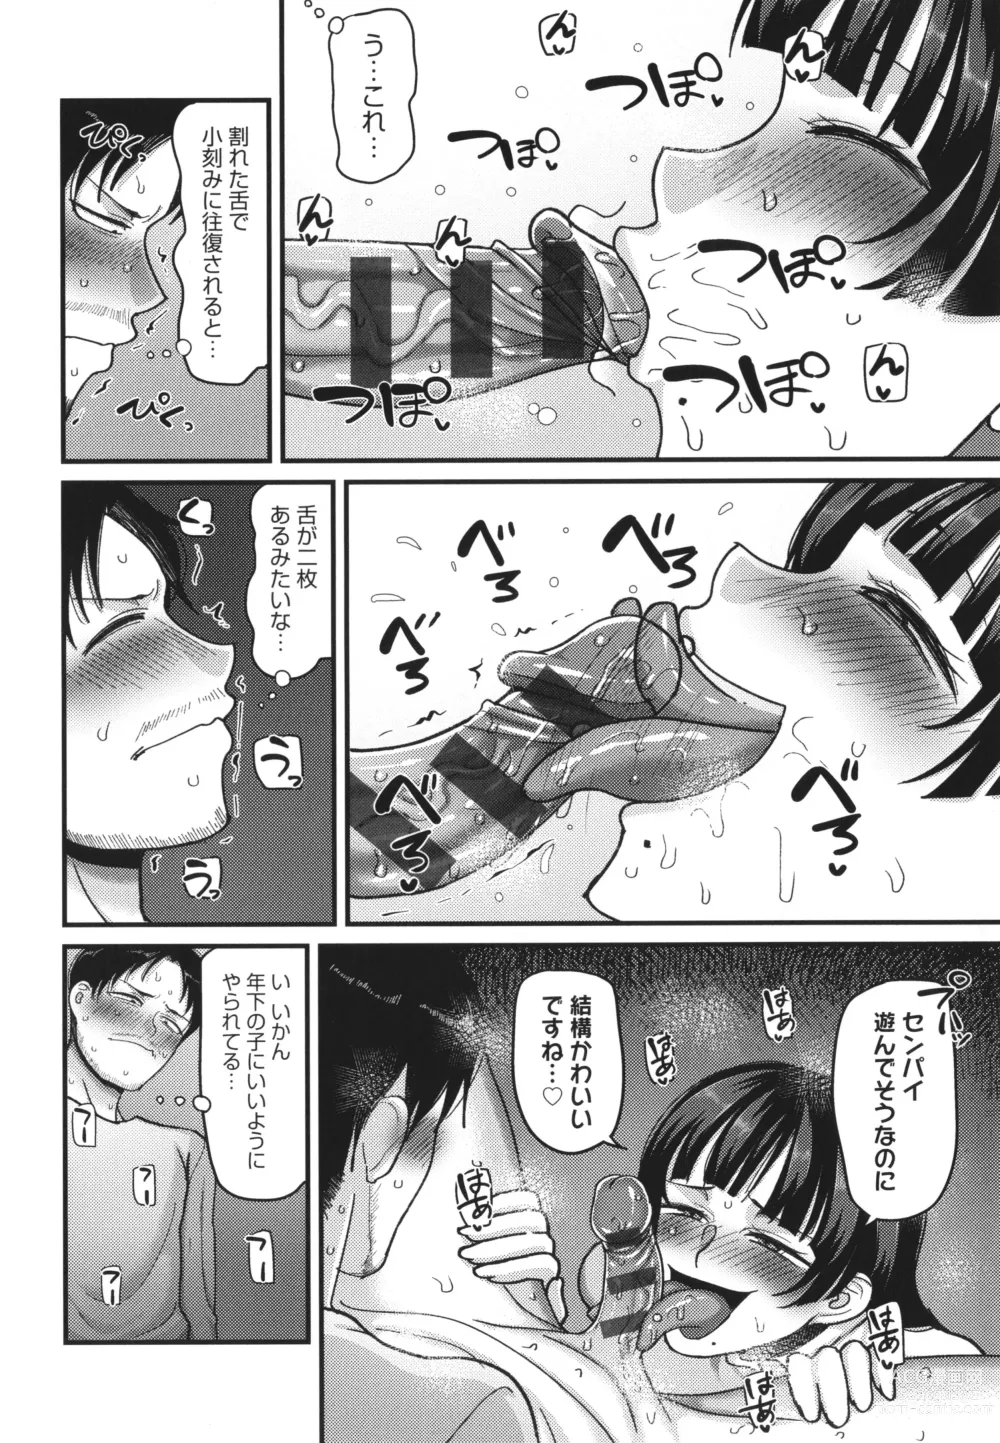 Page 185 of manga Nani Miten da yo! - What are you looking at?